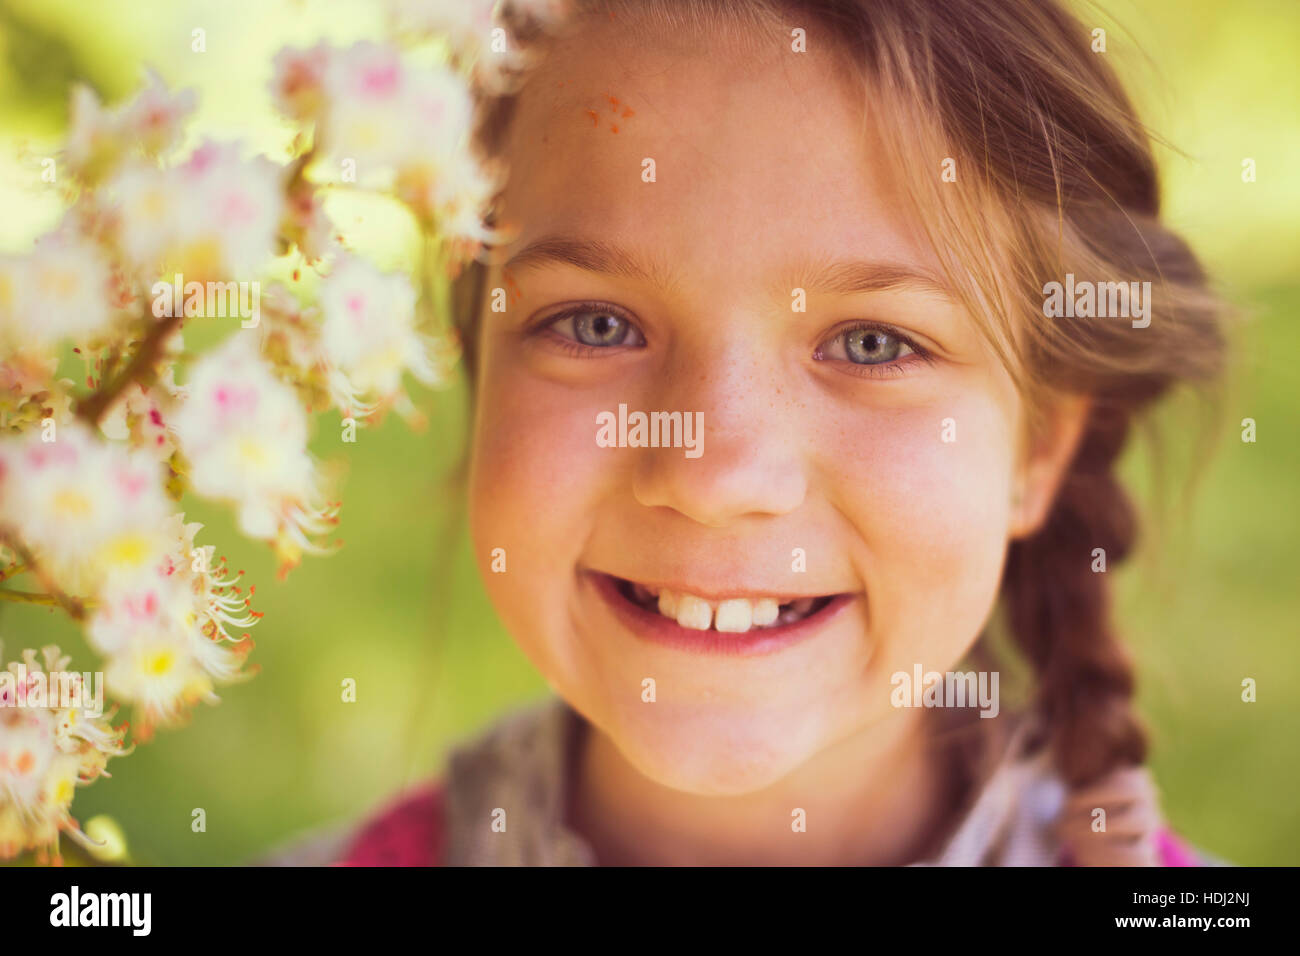 smiling child girl near blooming chestnut tree Stock Photo